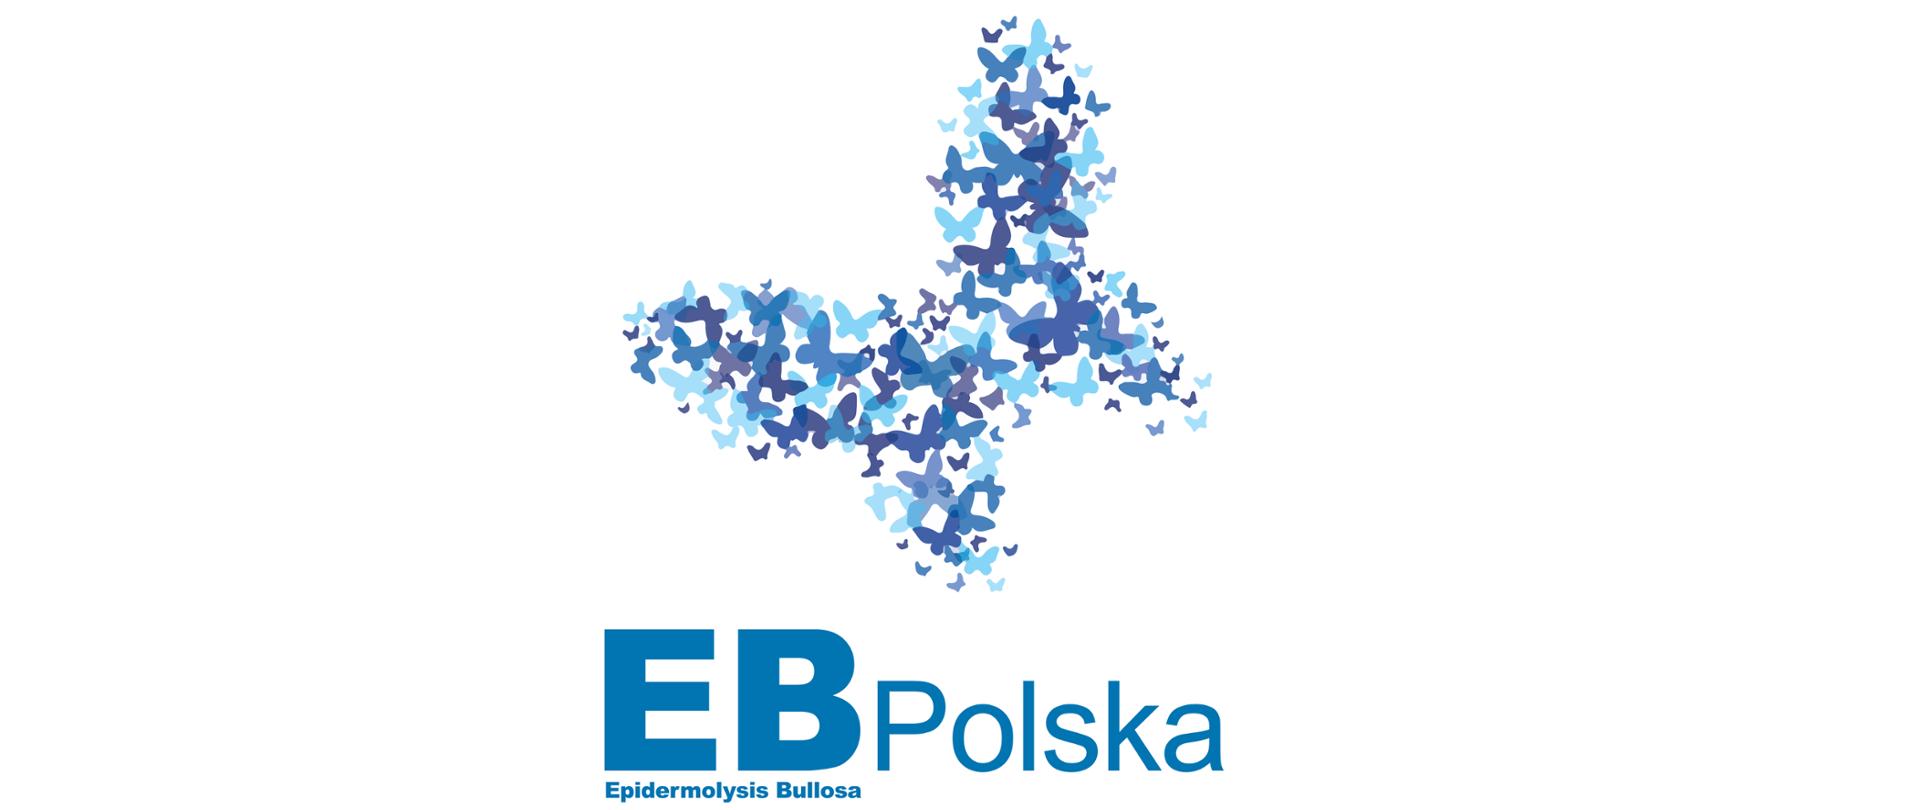 EB Polska